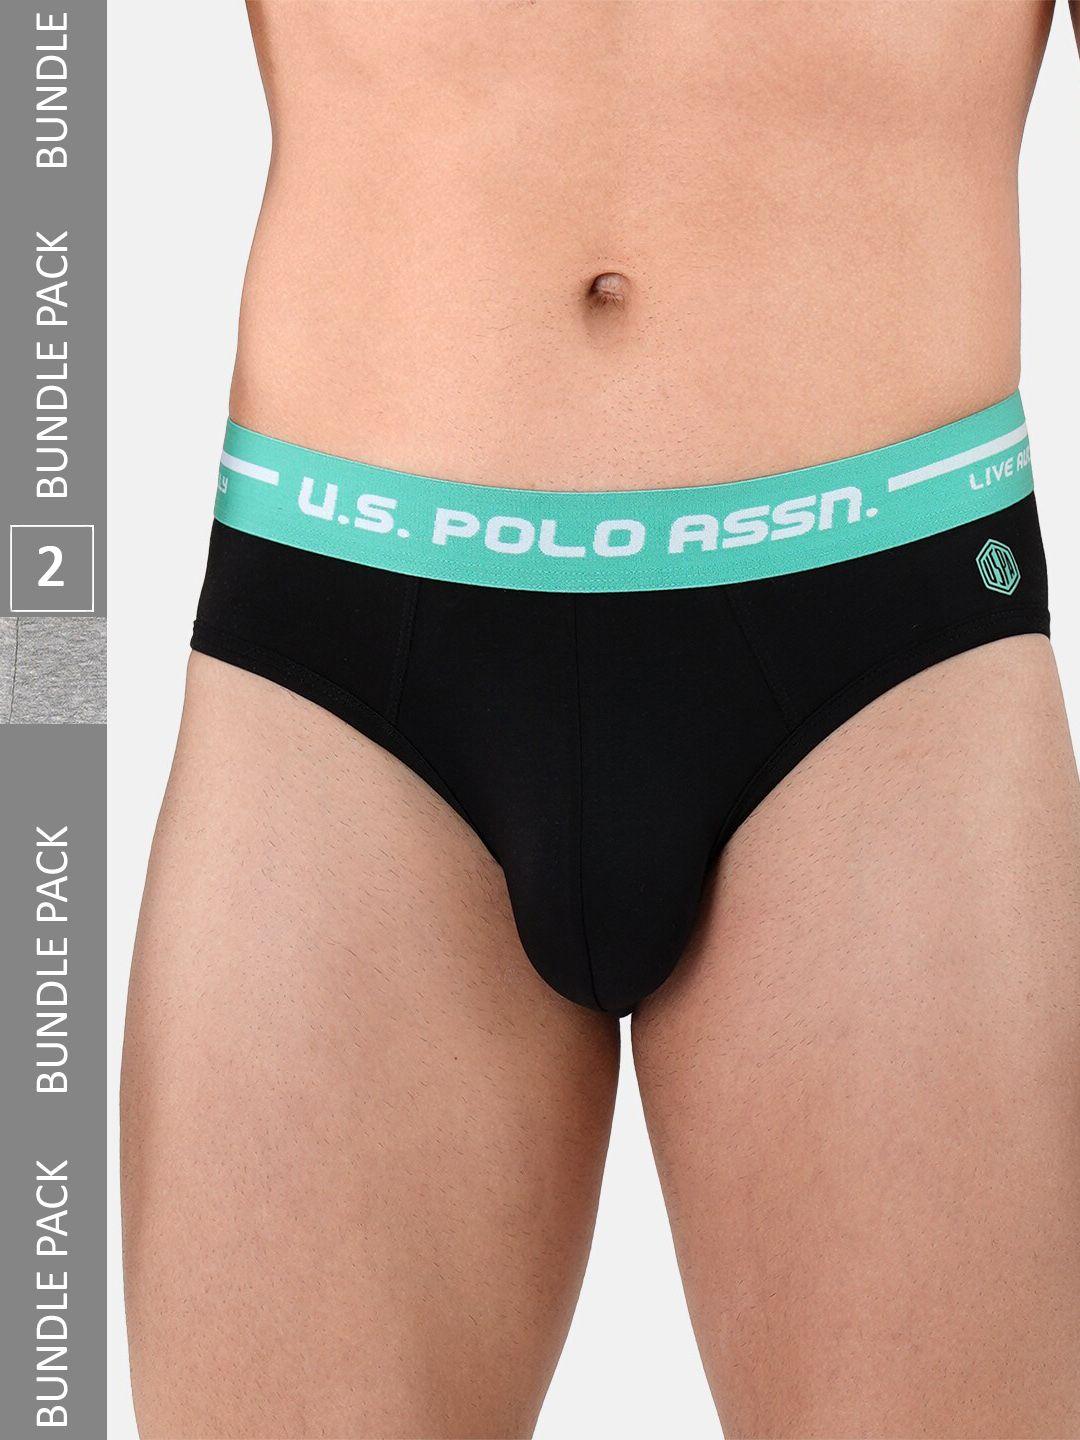 u.s. polo assn. men logo pack of 2 printed detail waistband  iyah briefs